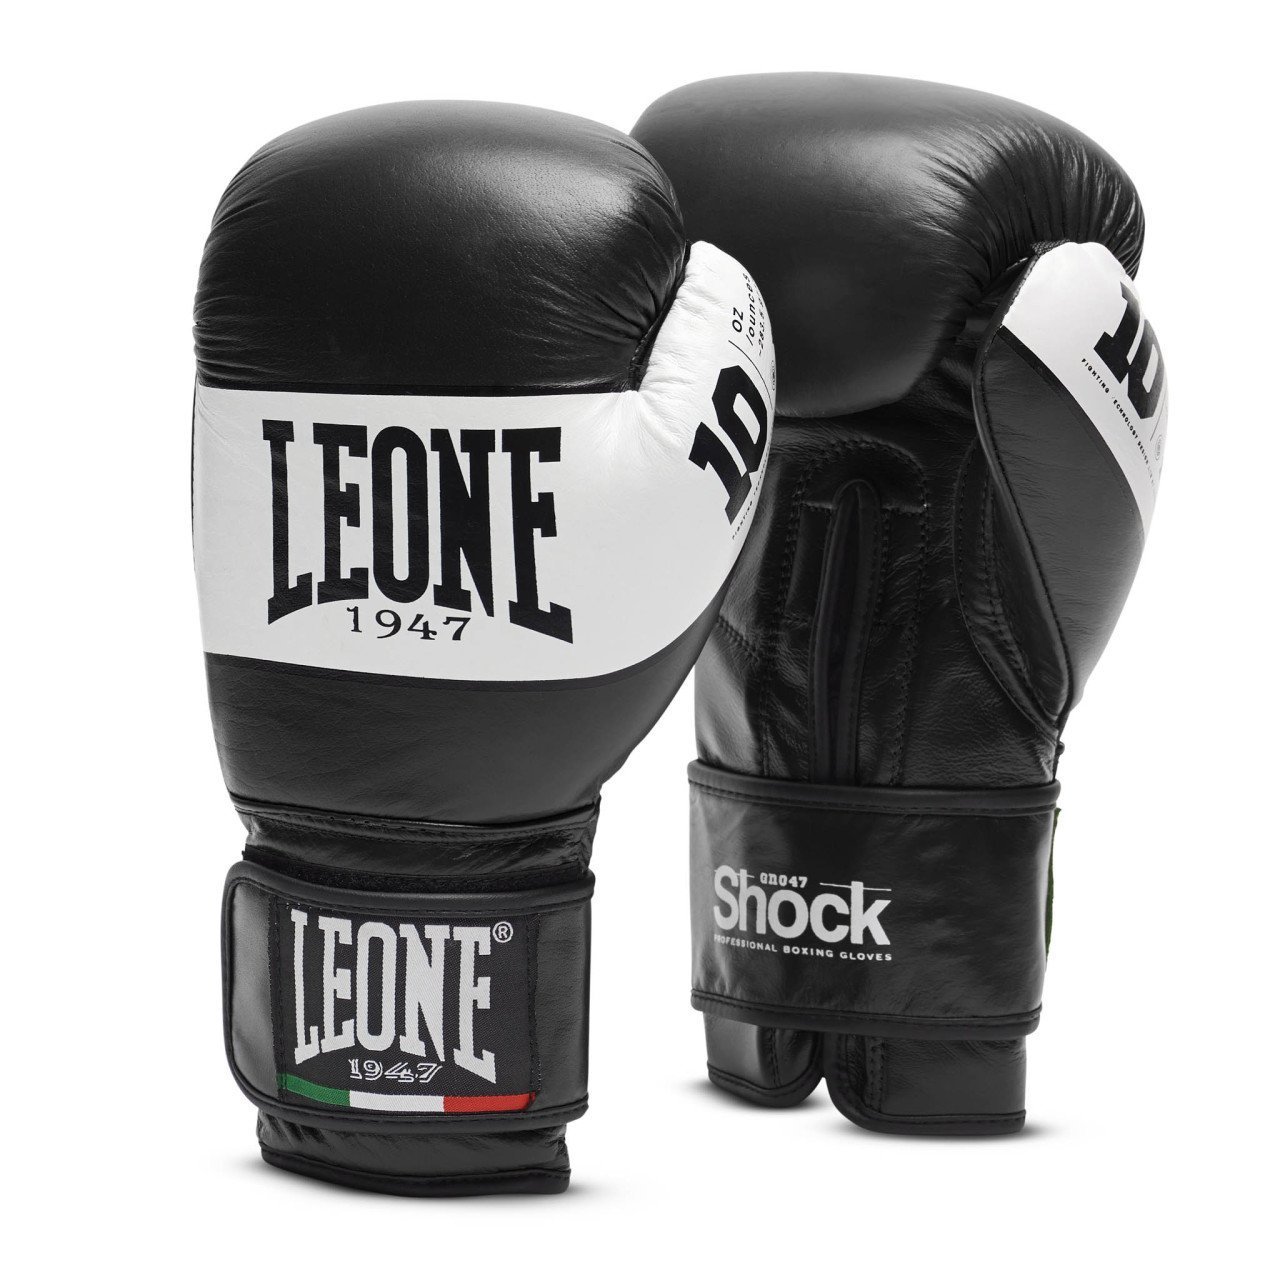 Боксерские перчатки Leone 1947. Боксерские перчатки Leone 1947 10 oz. Leone 1947 Contest 10 oz перчатки. Глори бокс